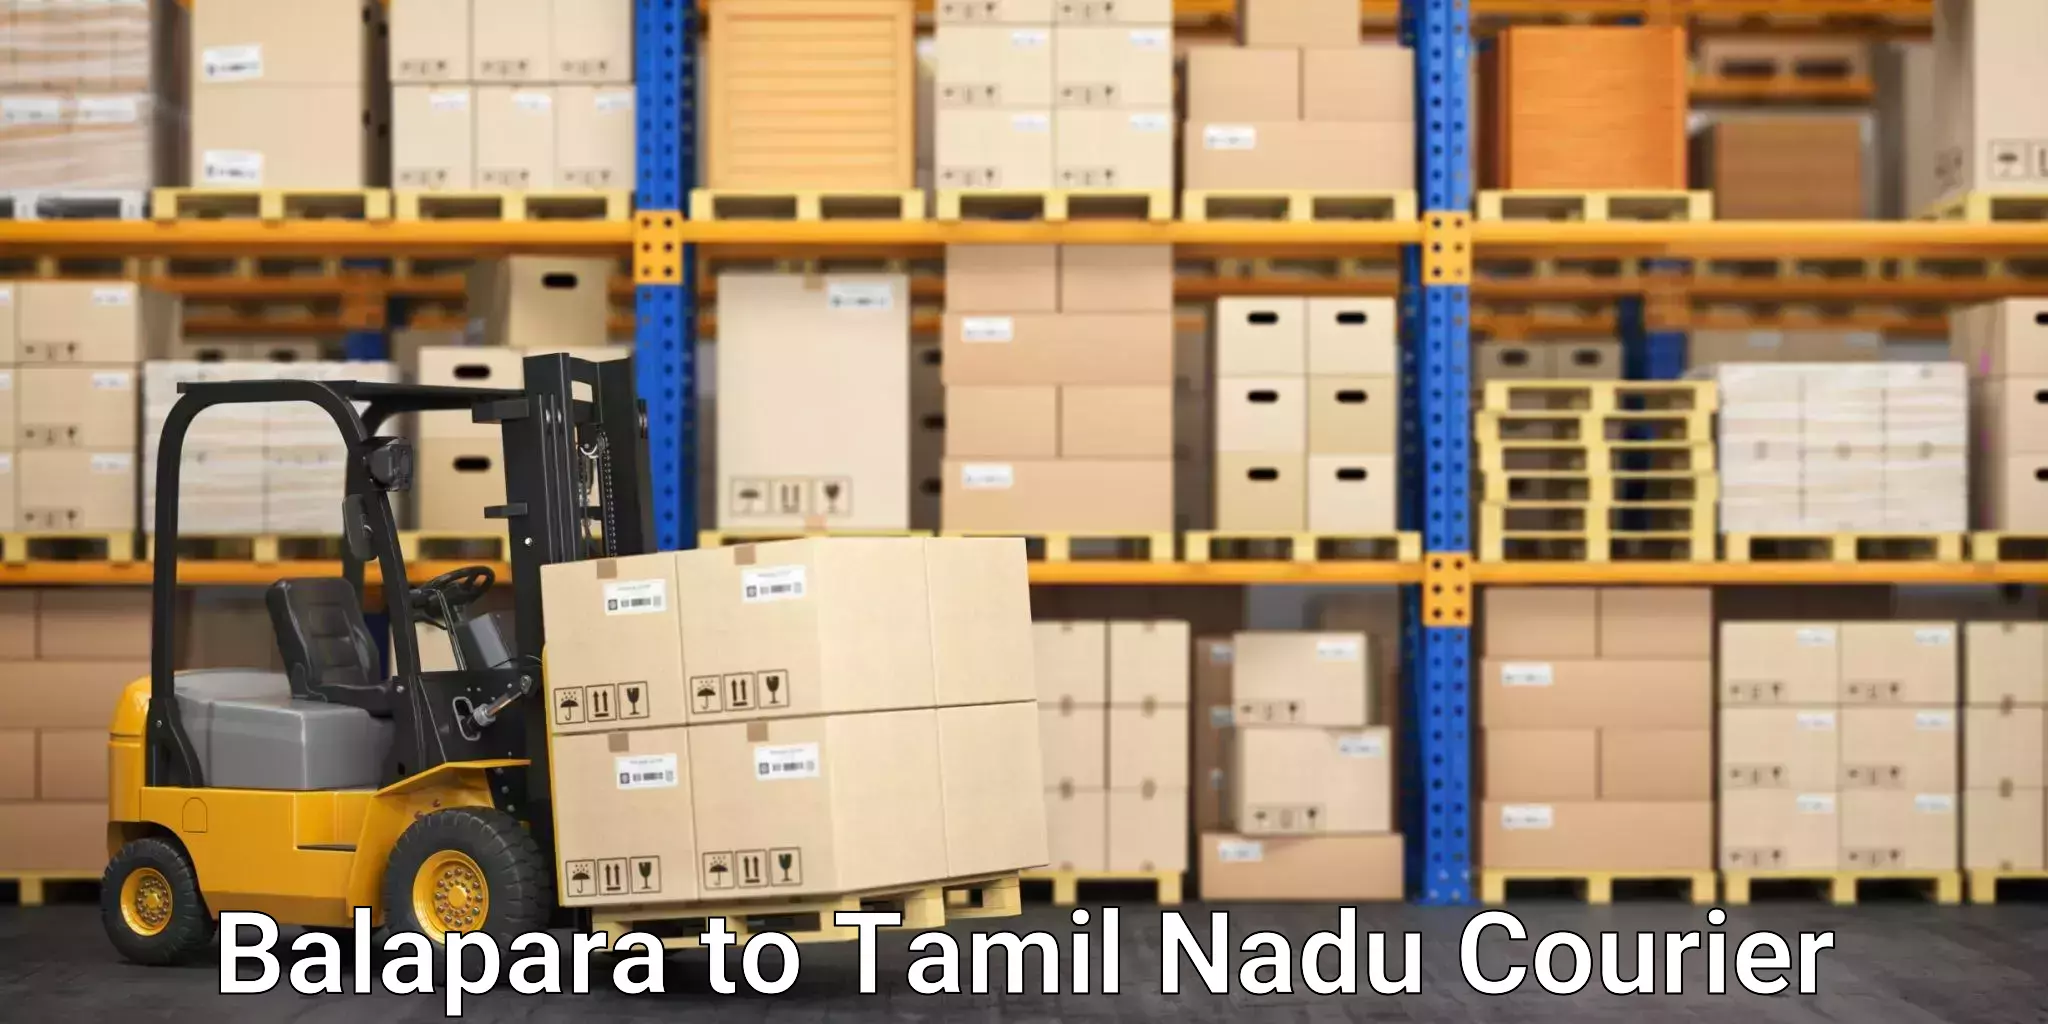 Full-service courier options Balapara to Kulittalai